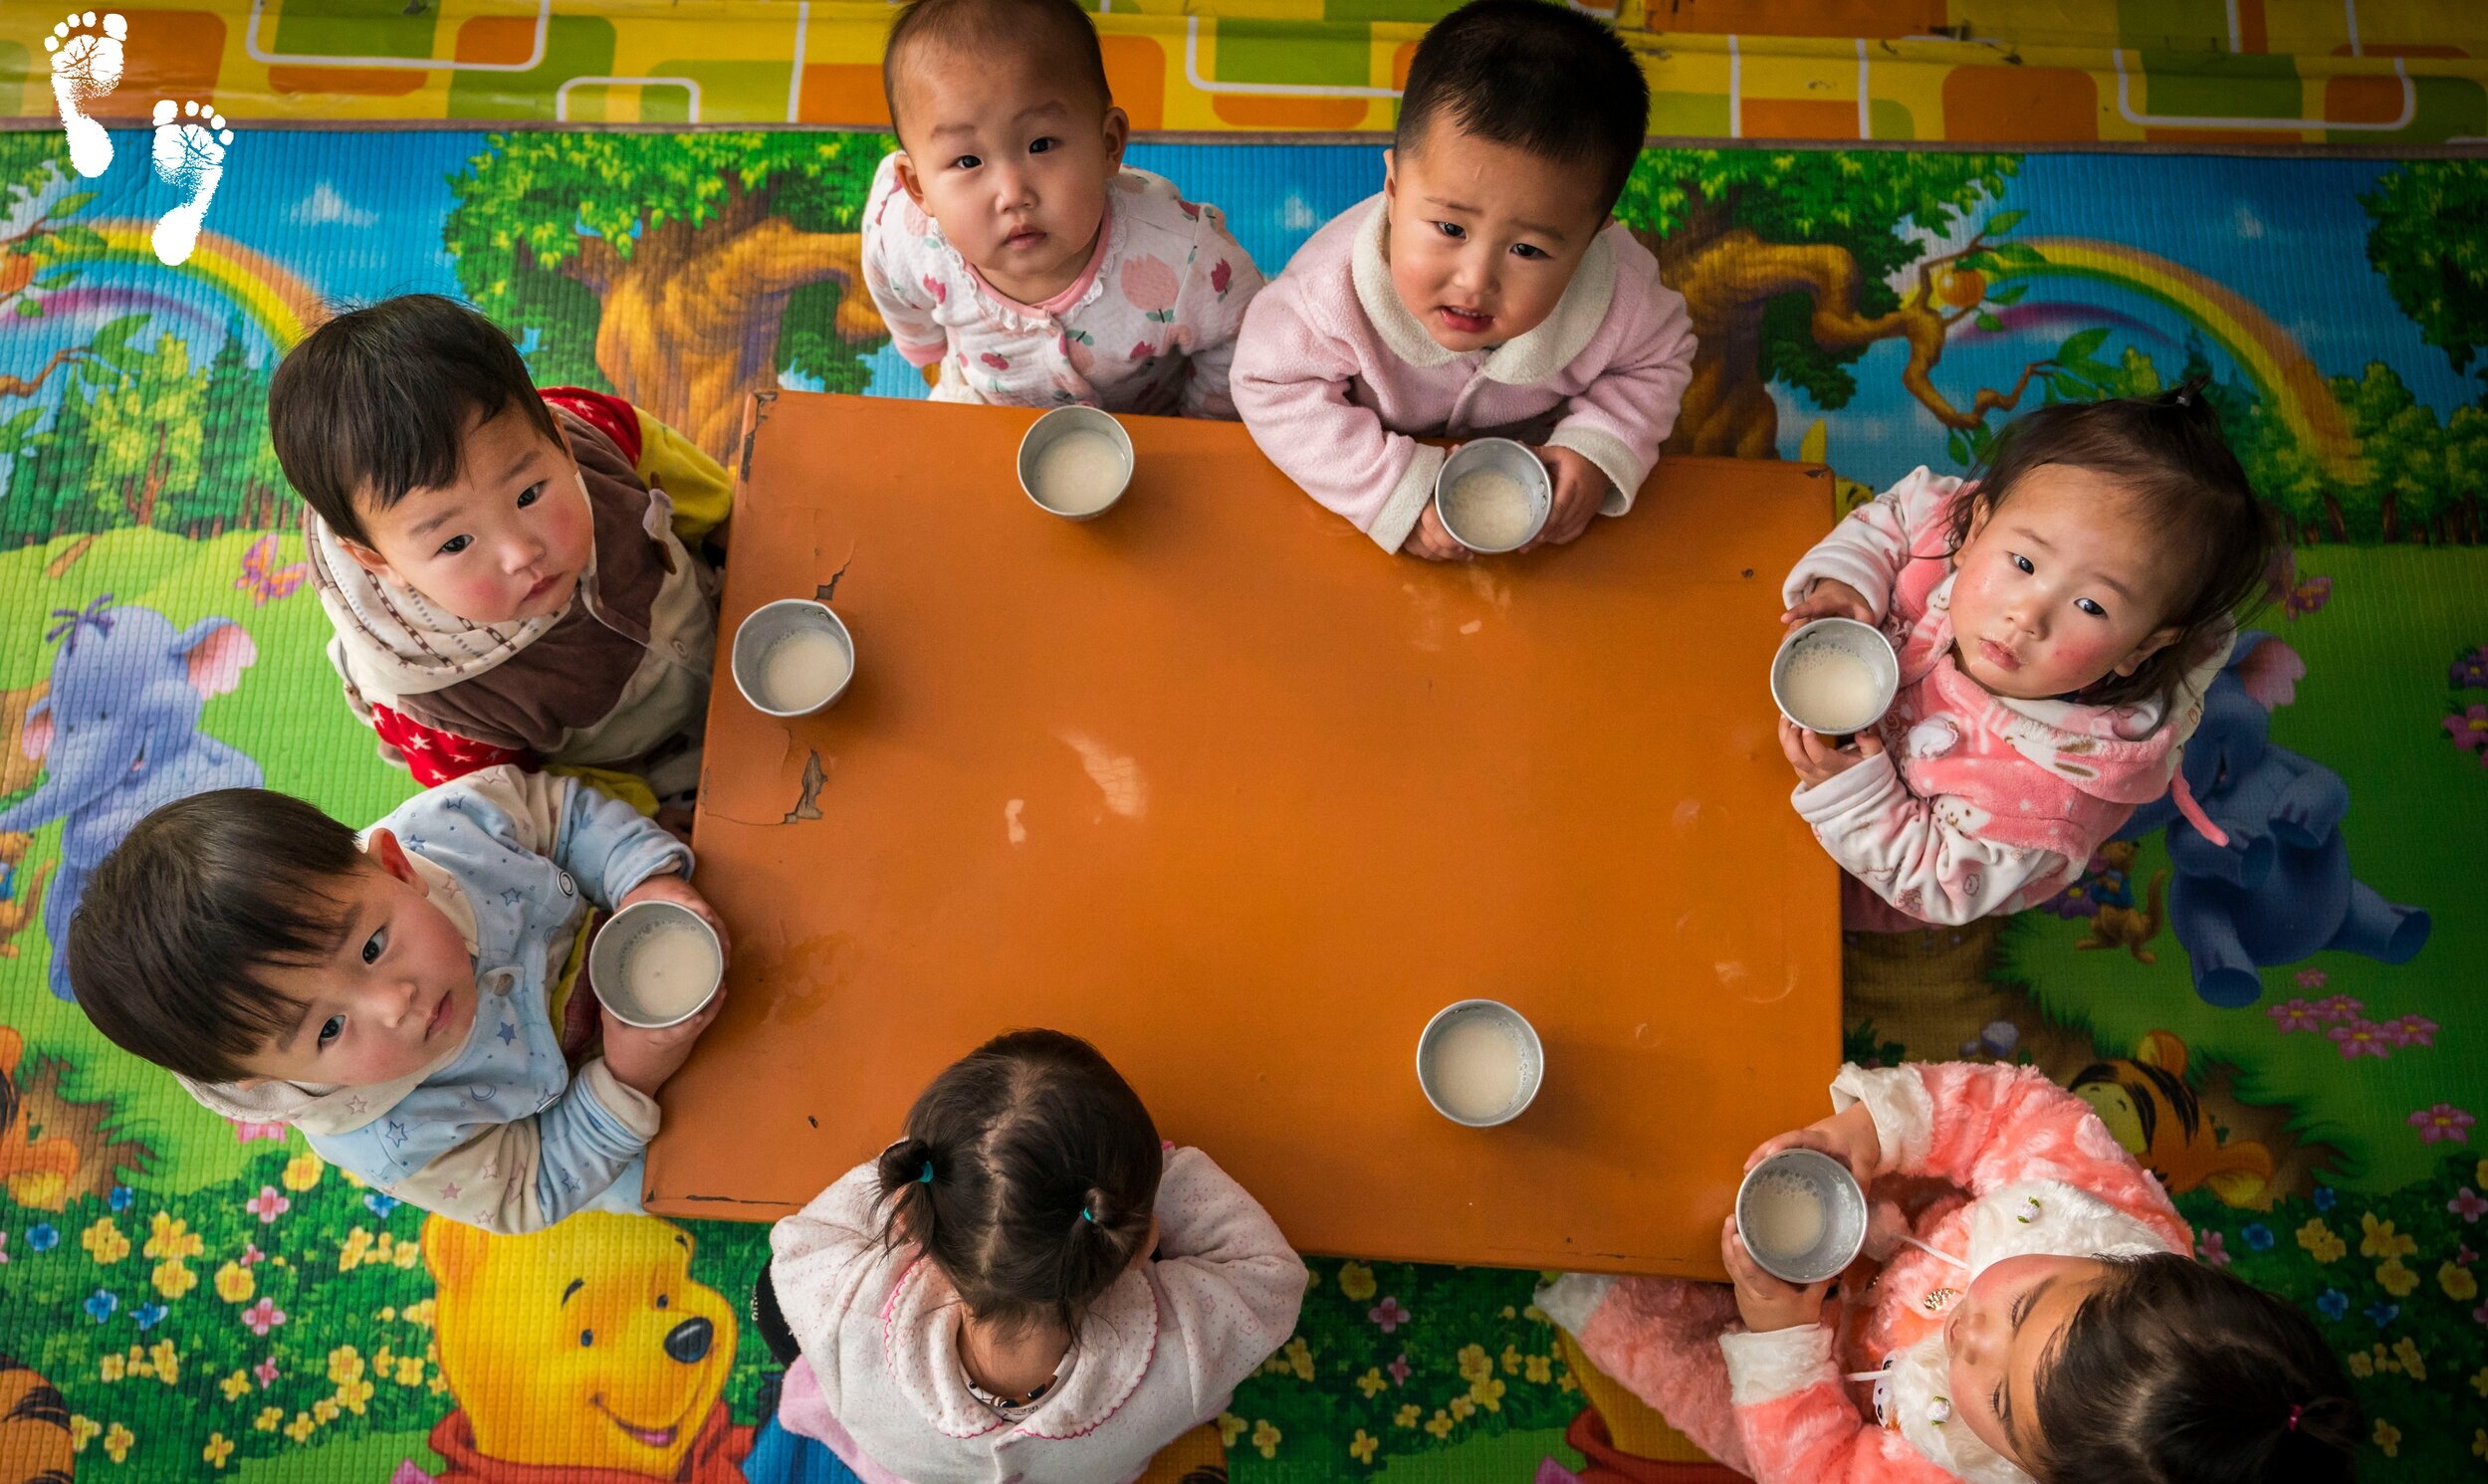 Children in North Korea drink soymilk to maintain healthy nutrition.